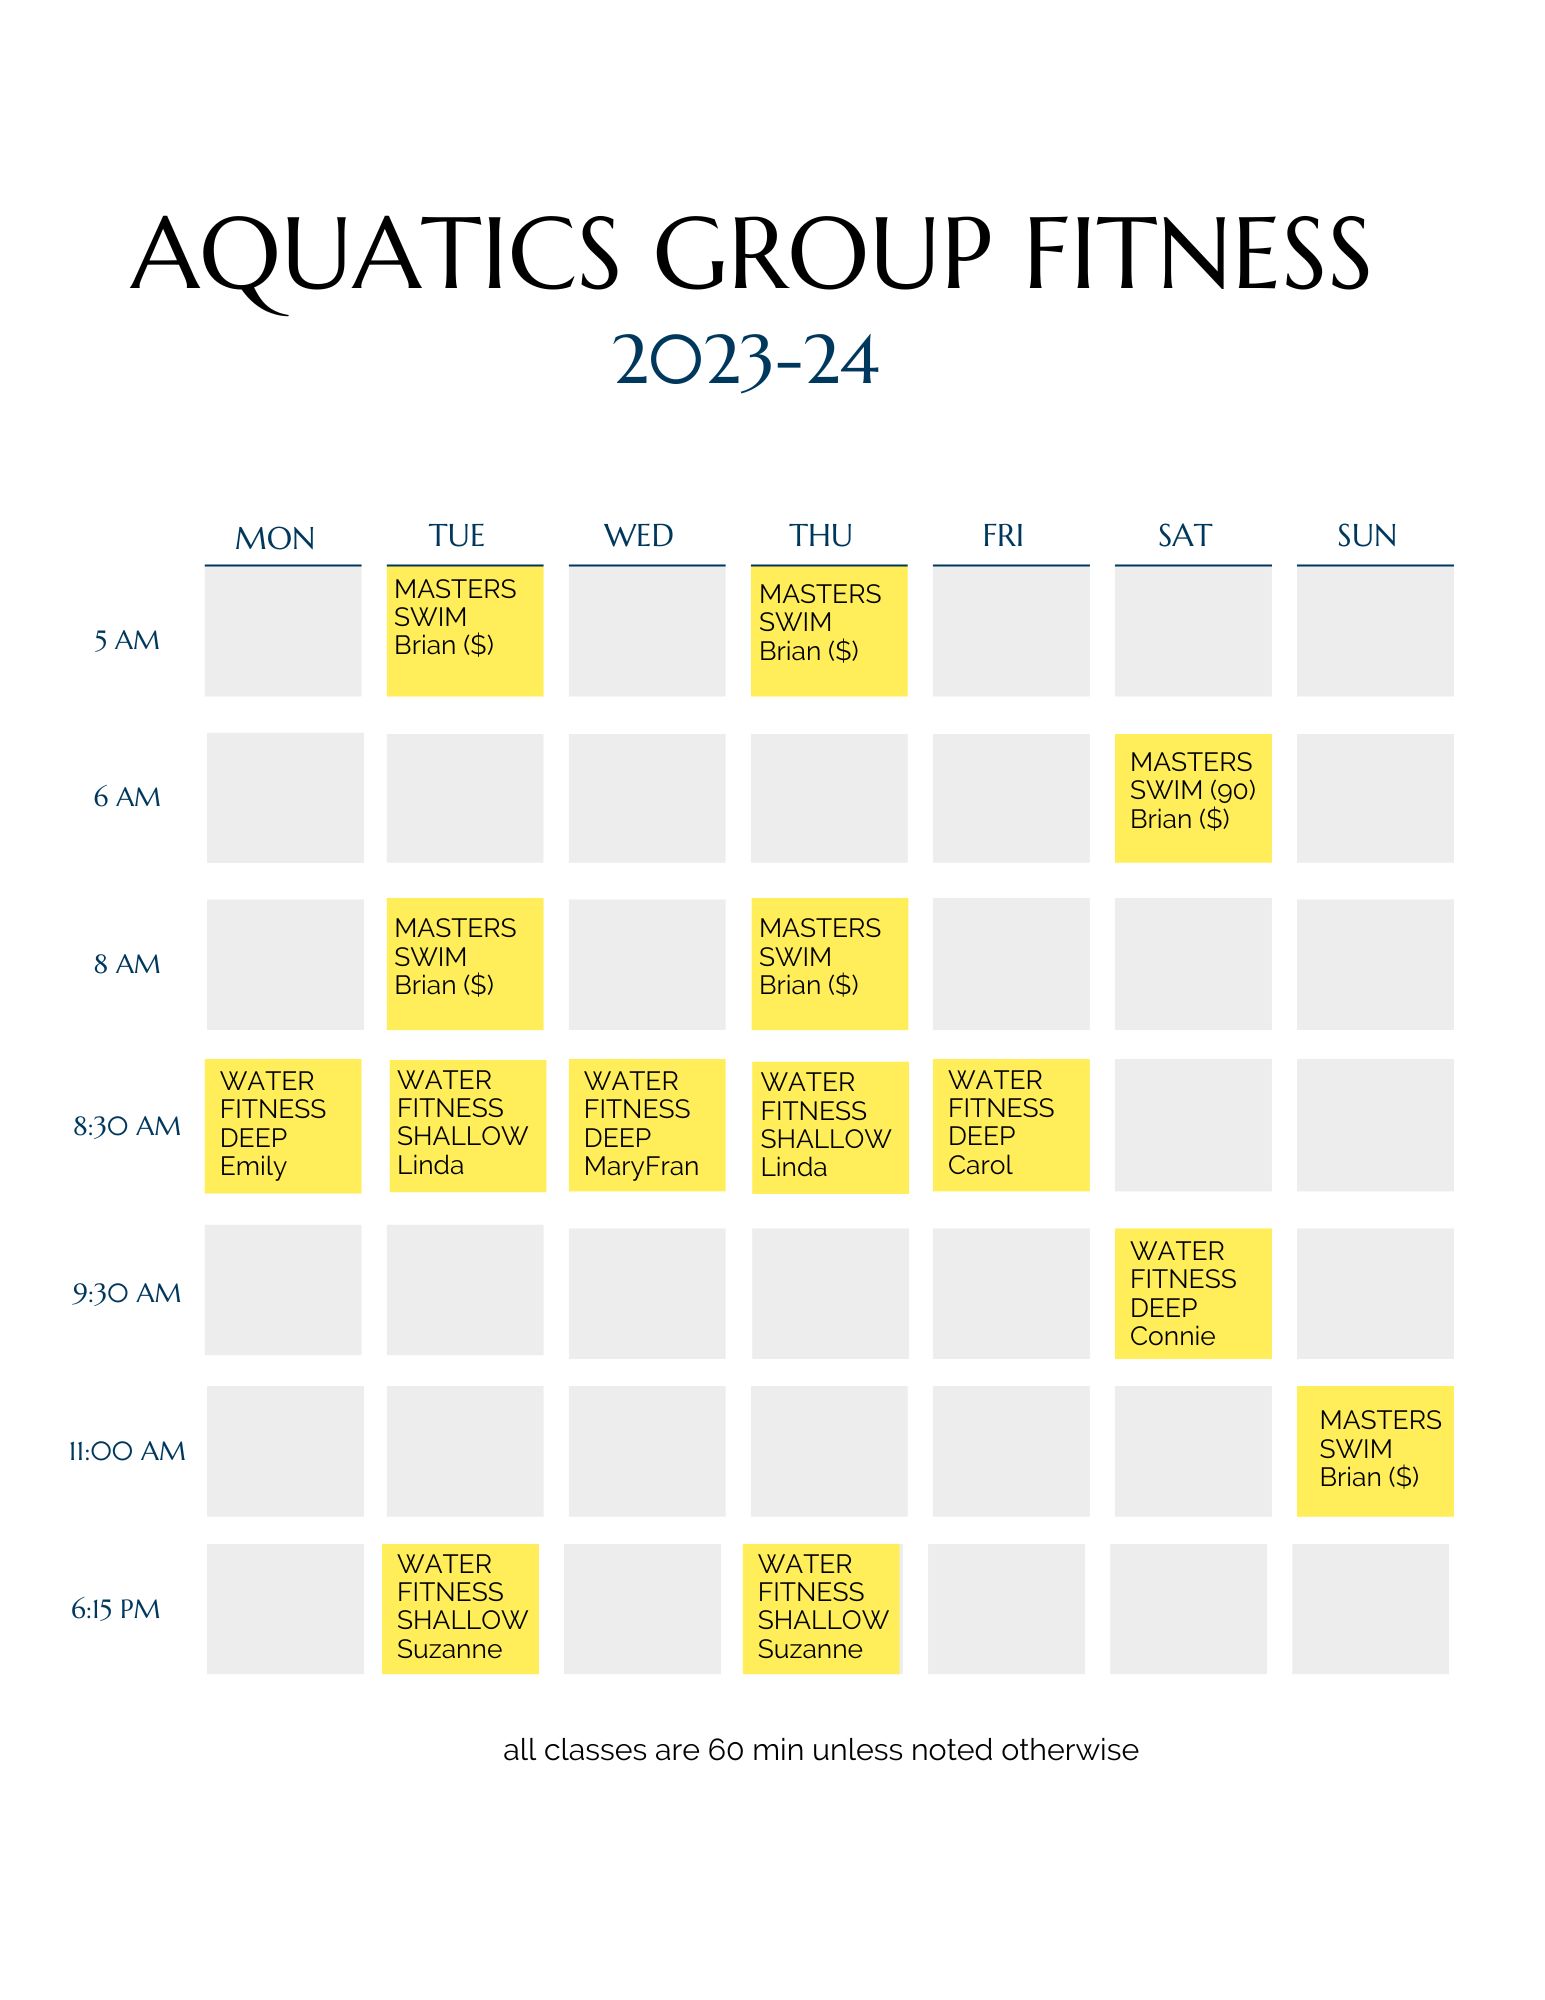 Acquatics Group Fitness